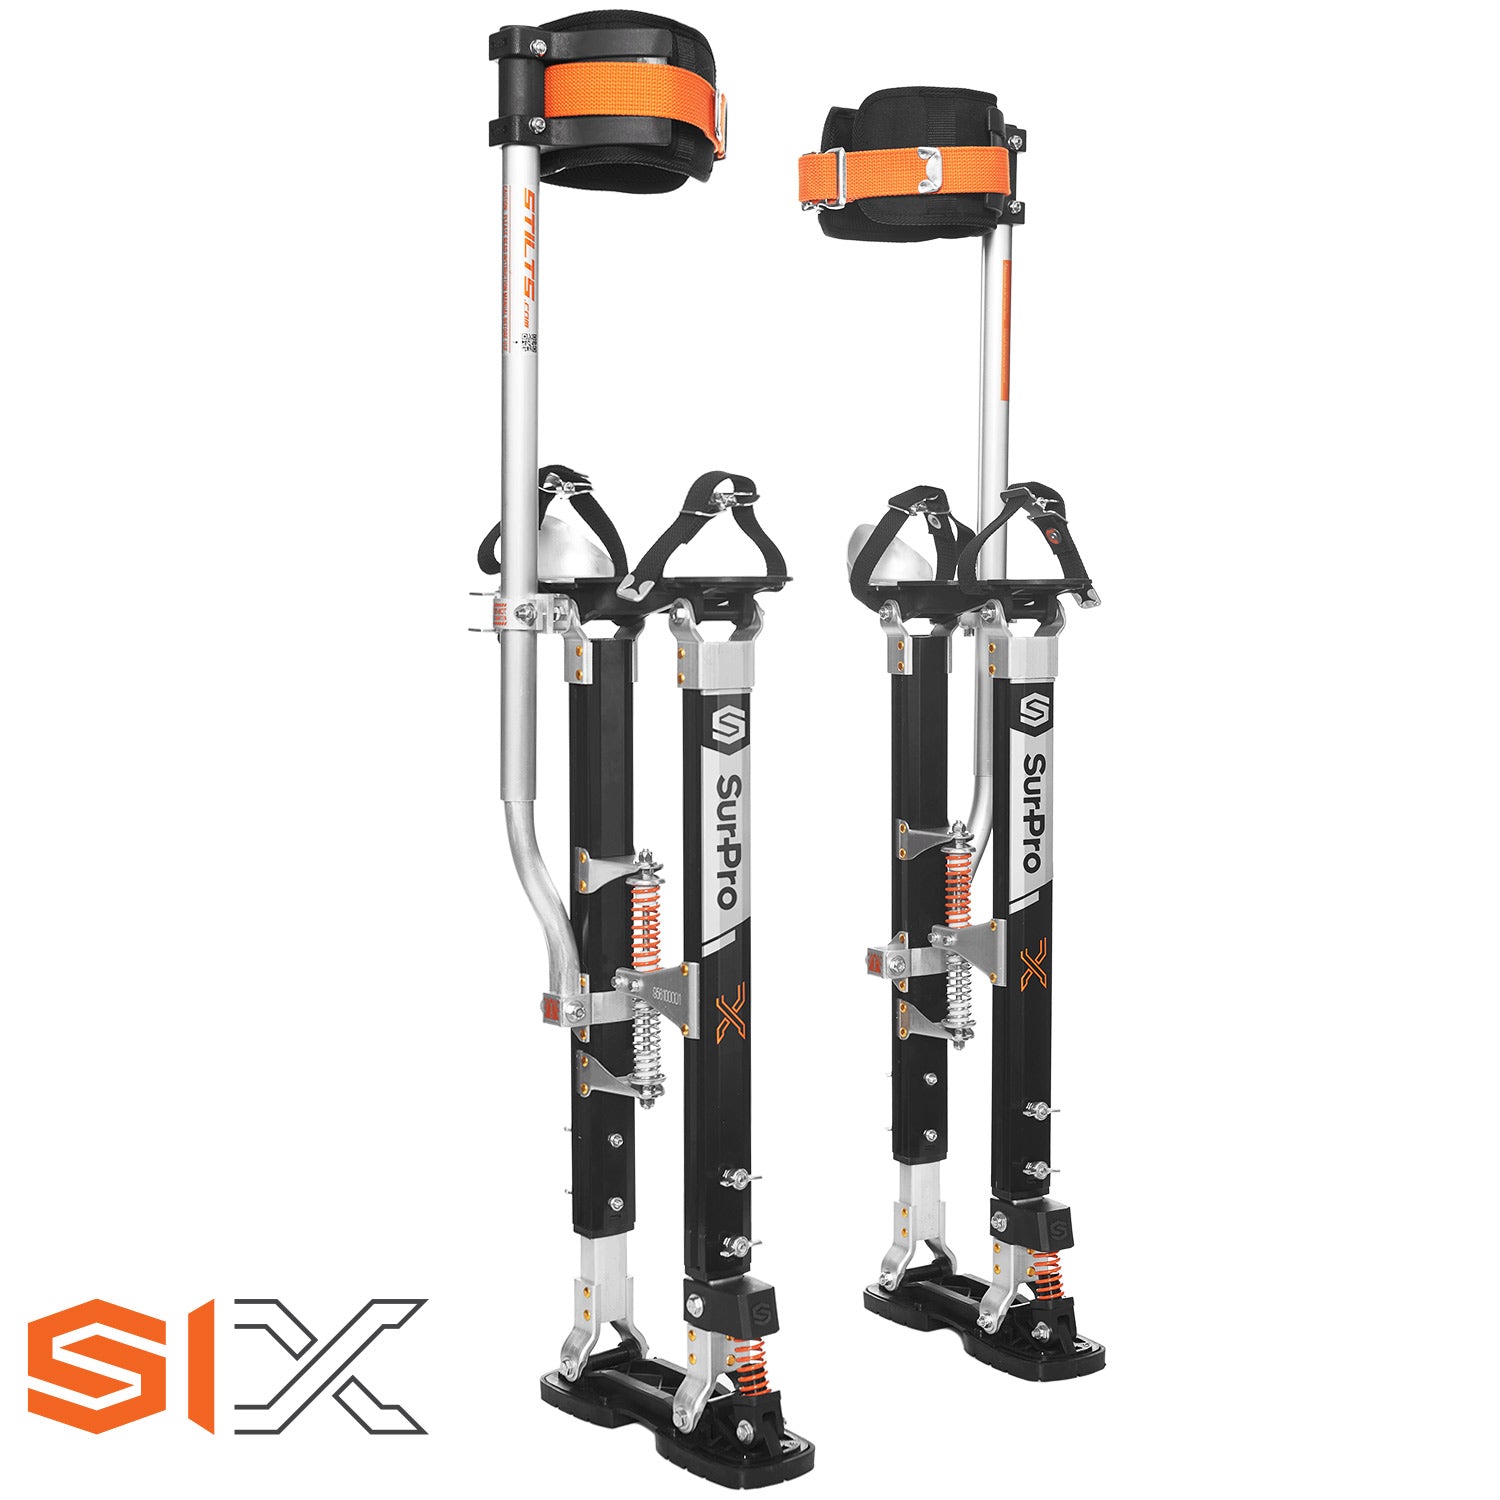 SurPro S1X Magnesium Drywall Stilts